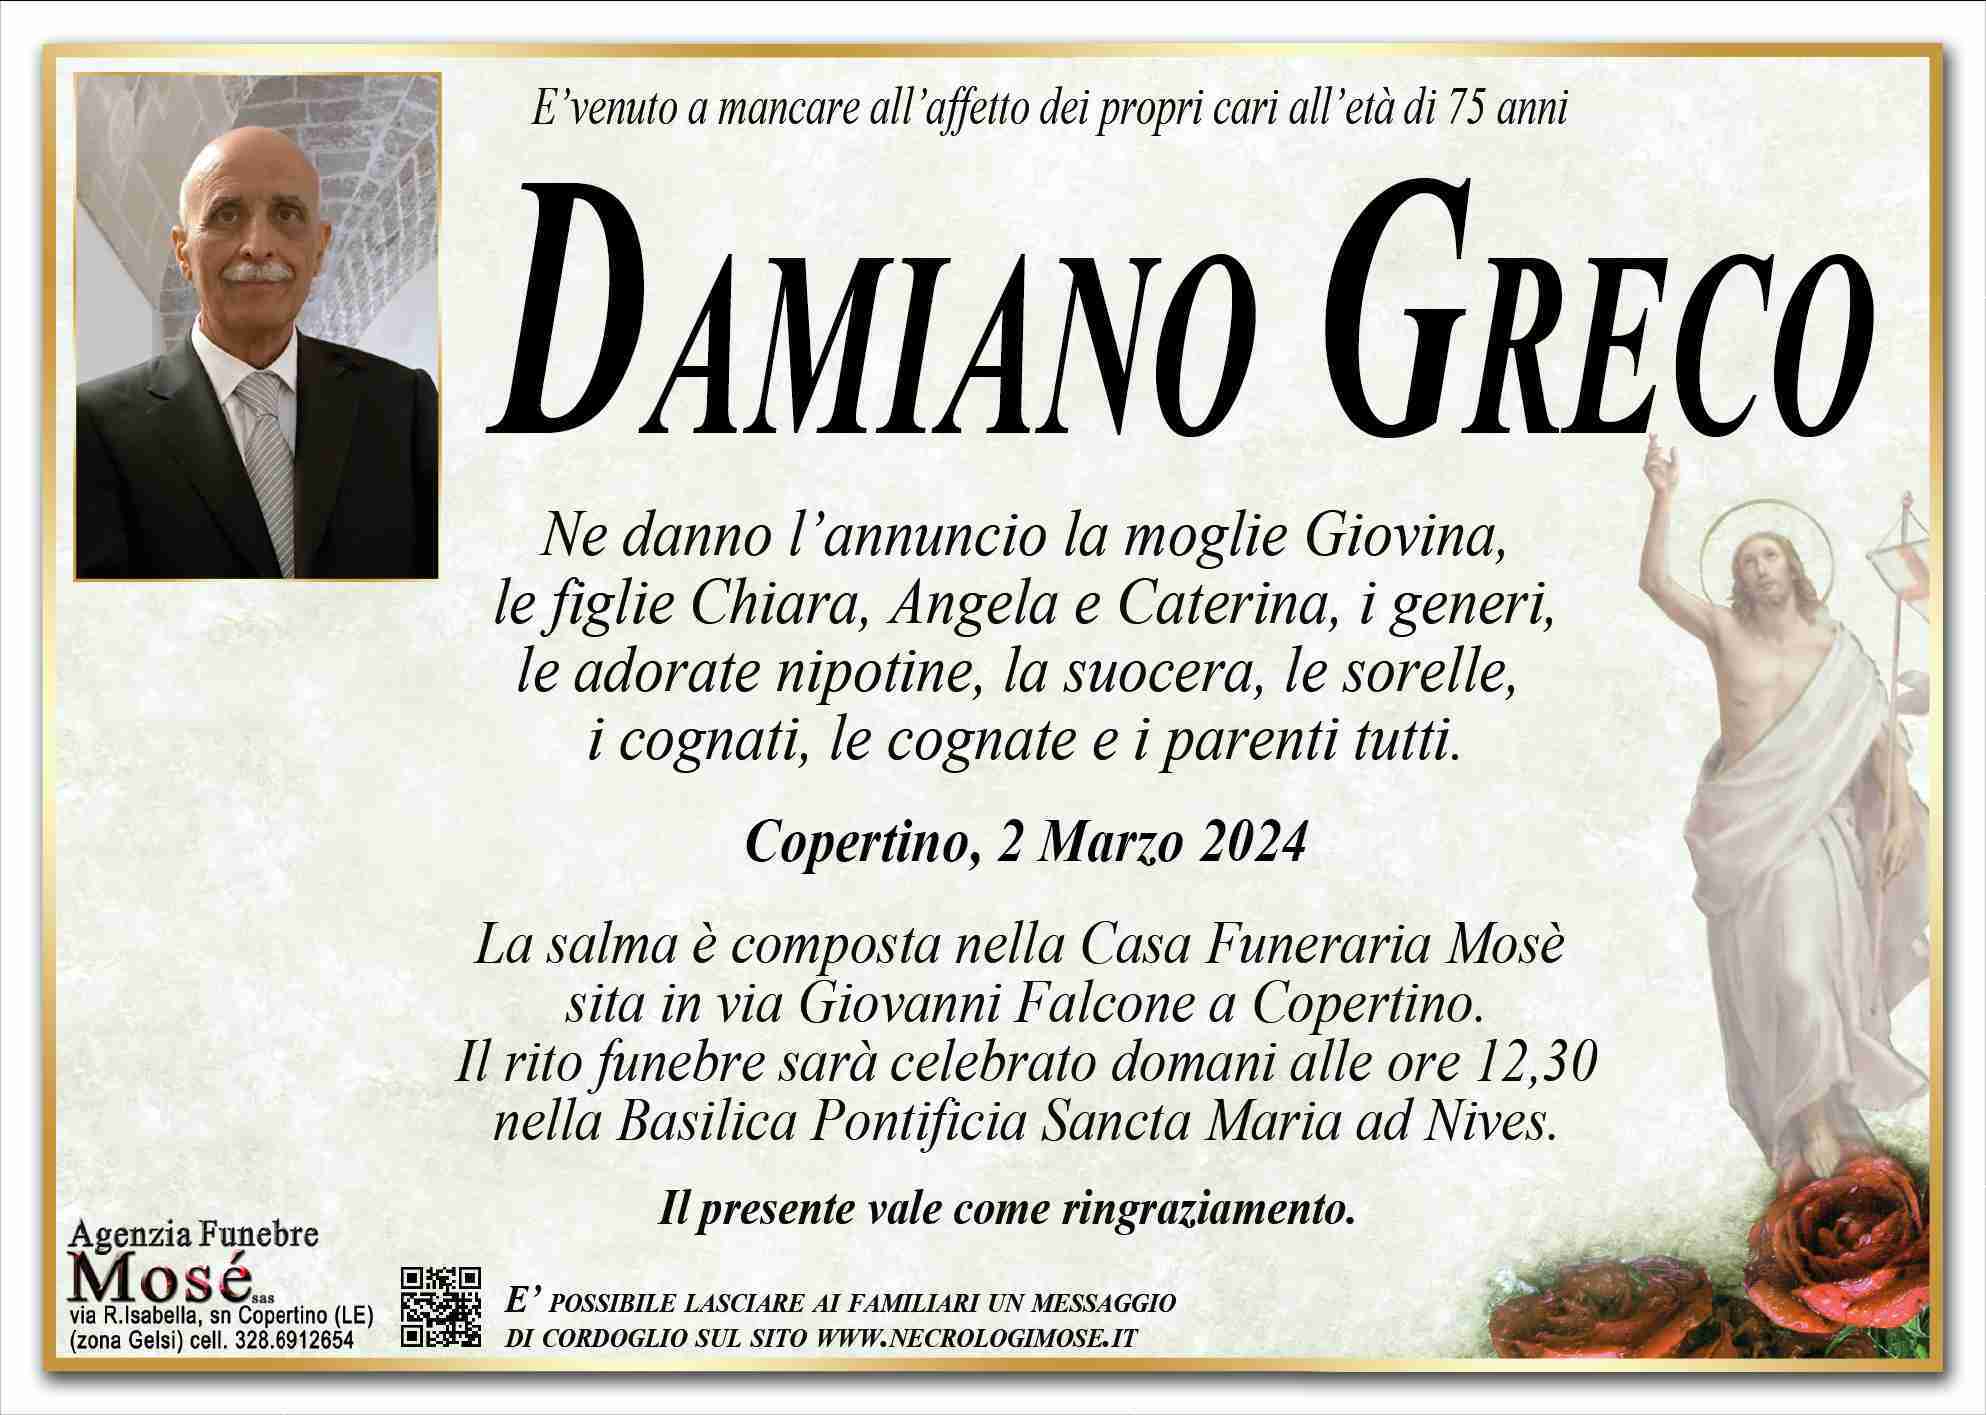 Damiano Greco